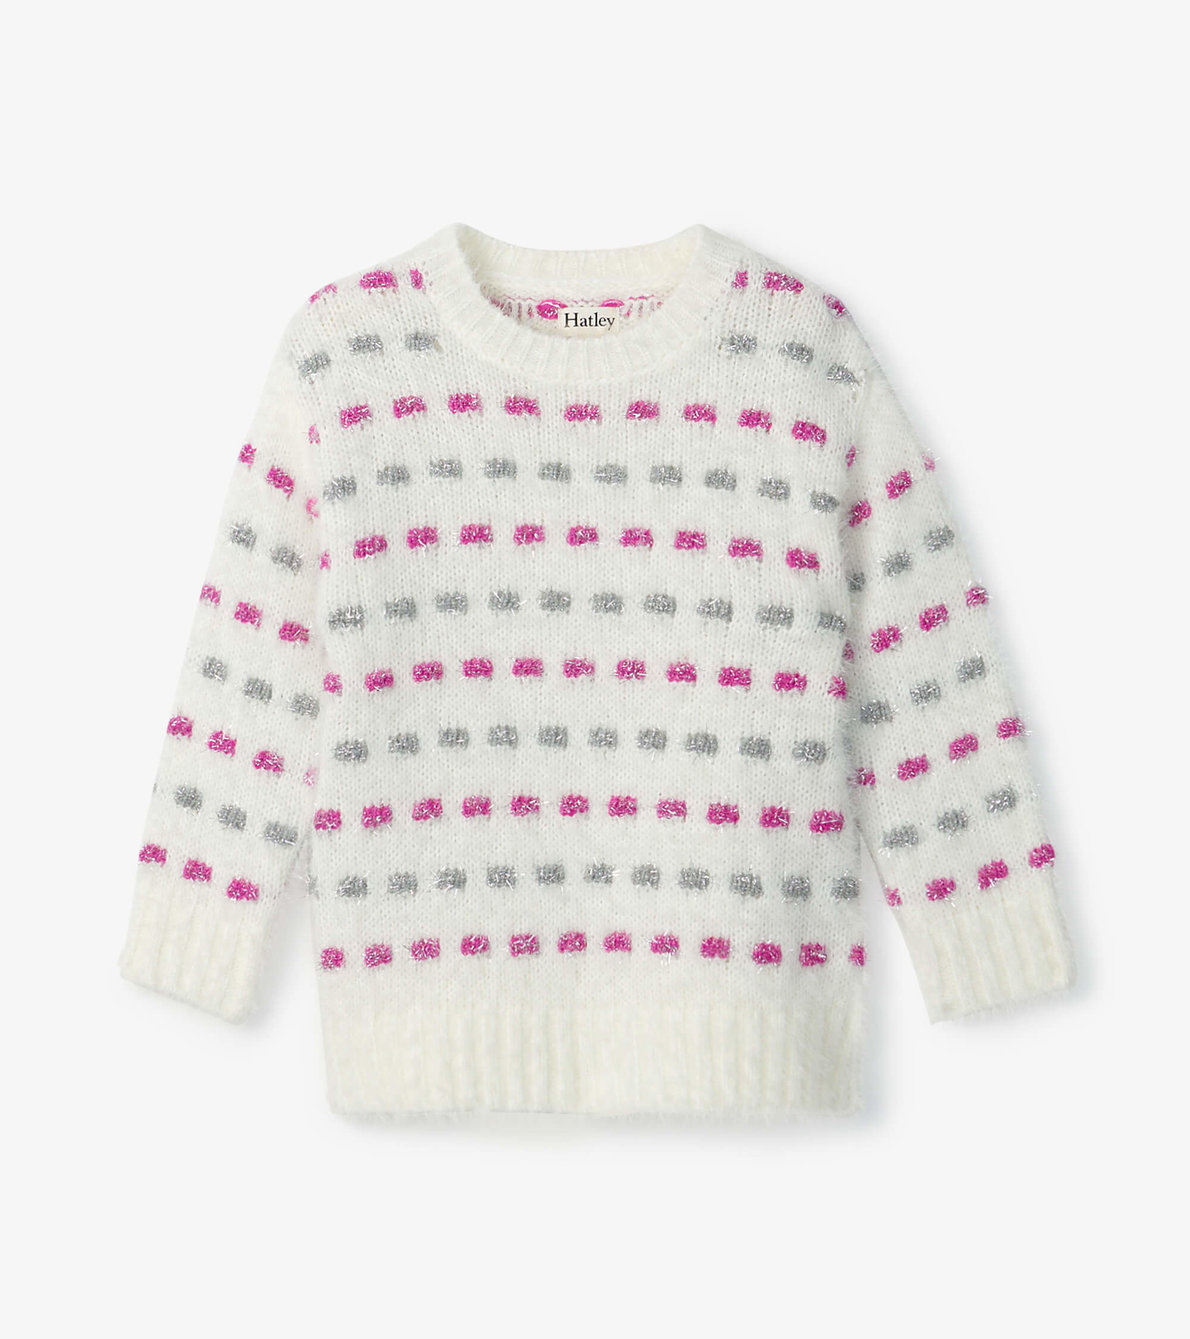 View larger image of Girls Basket Weave Sweater Tunic